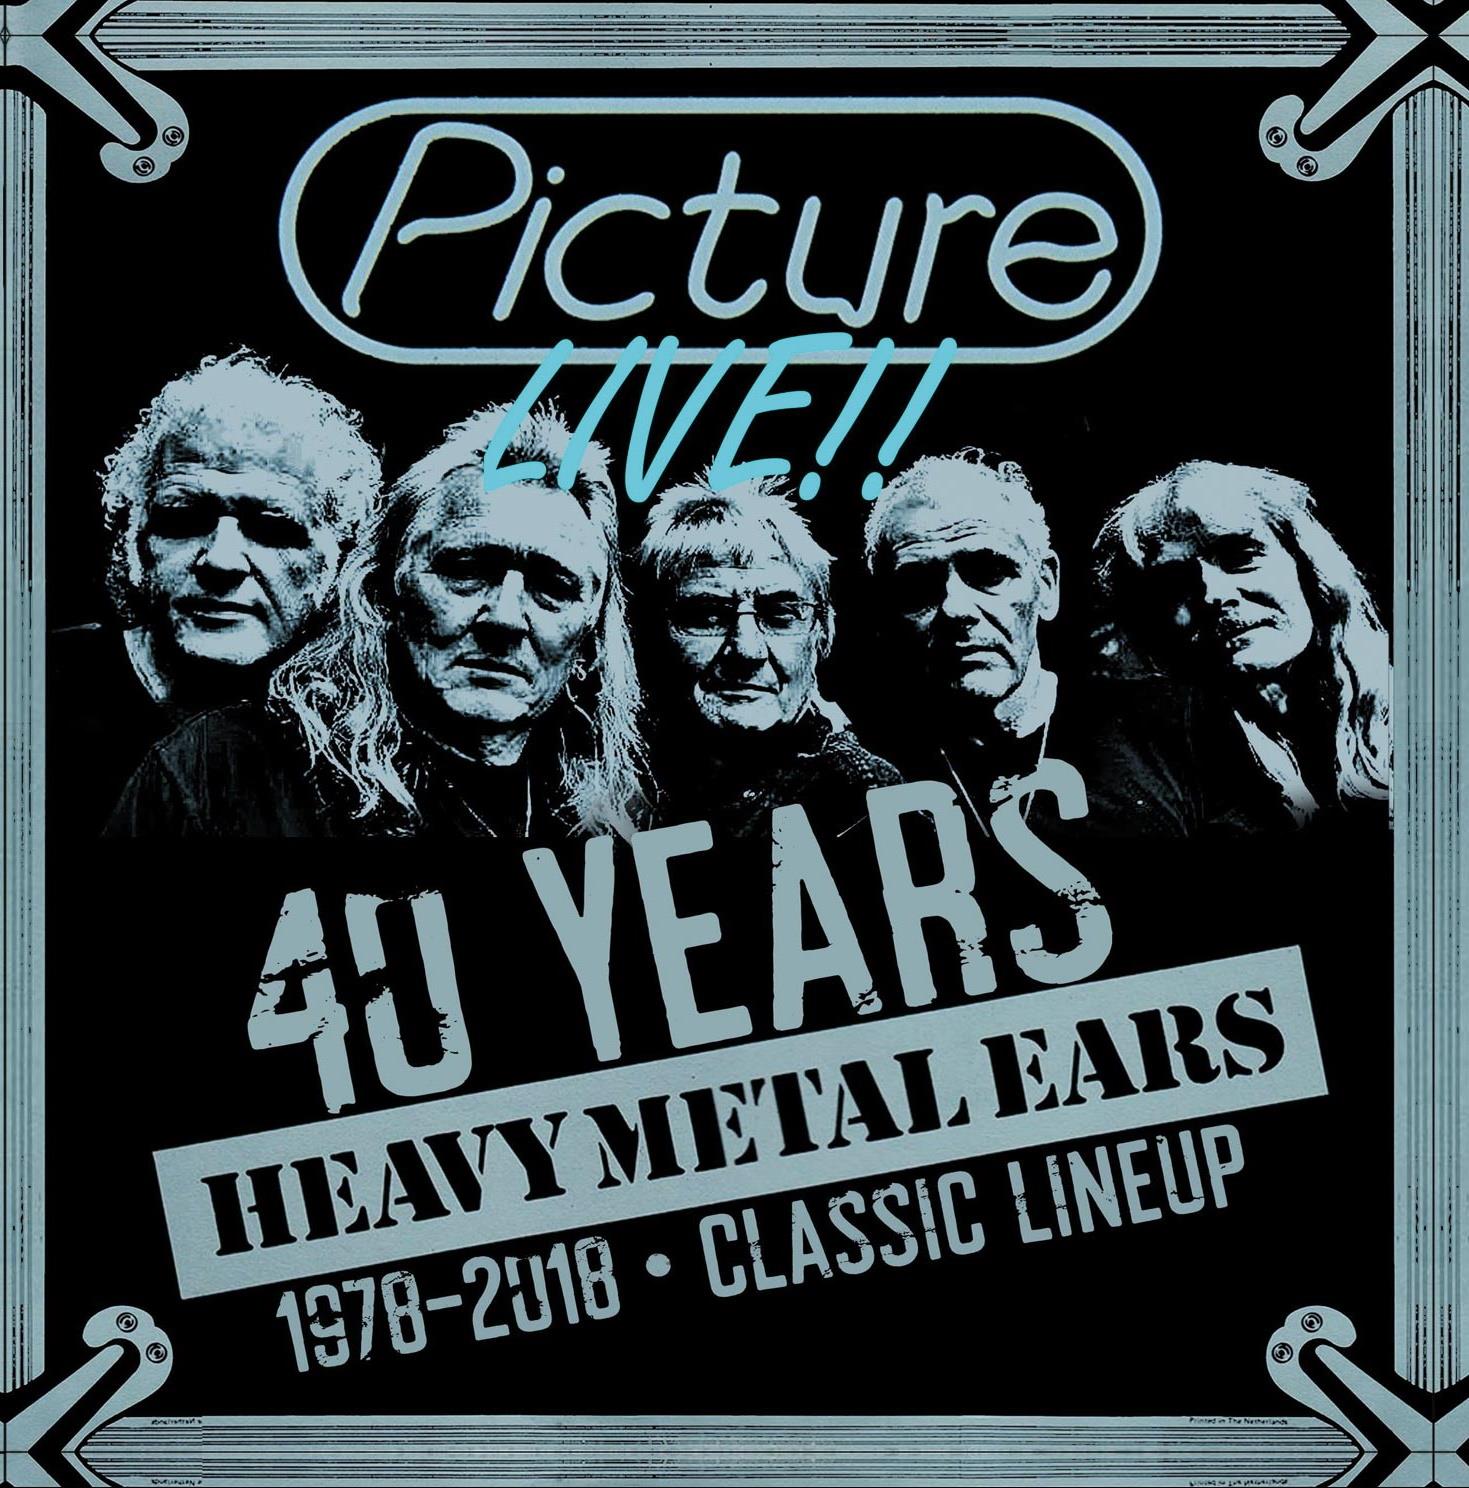 PICTURE CD 40 Years Heavy Metal Ears